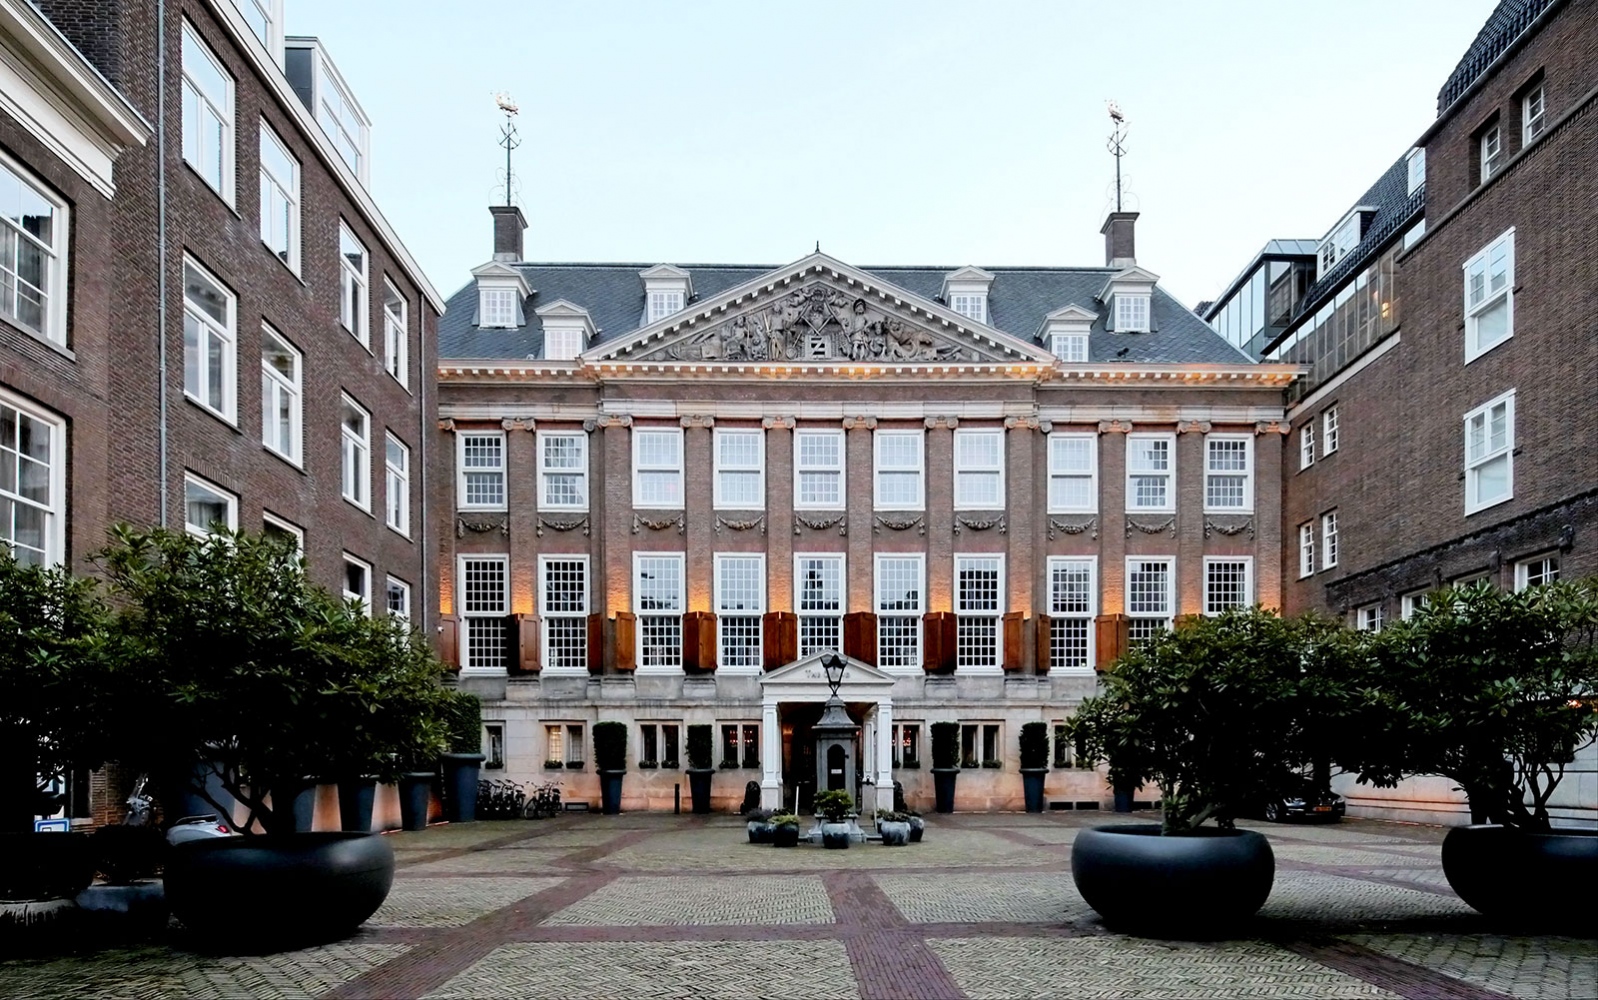 Image from Architecture - Sofitel Legend The Grand Amsterdam  